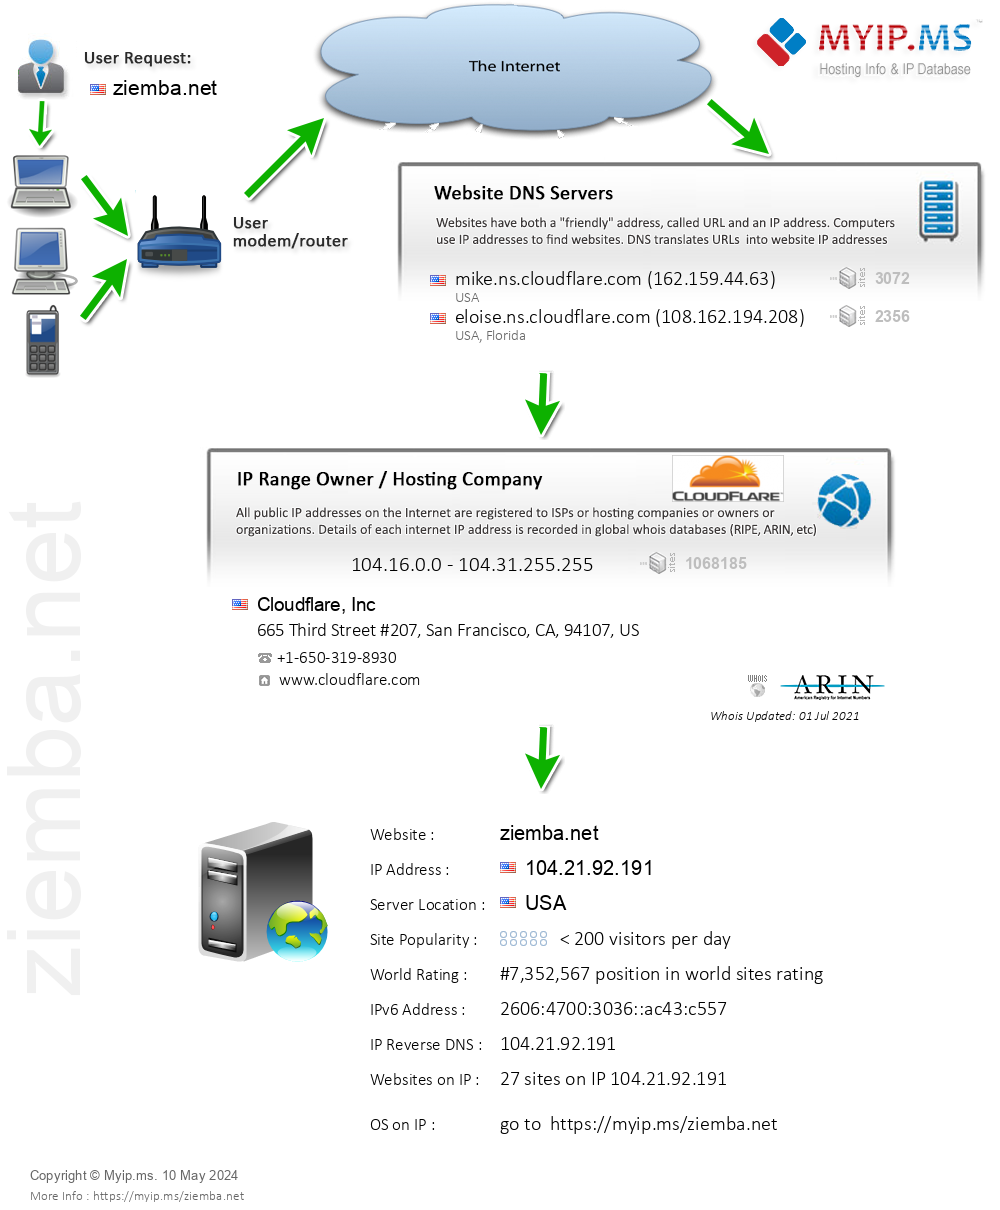 Ziemba.net - Website Hosting Visual IP Diagram